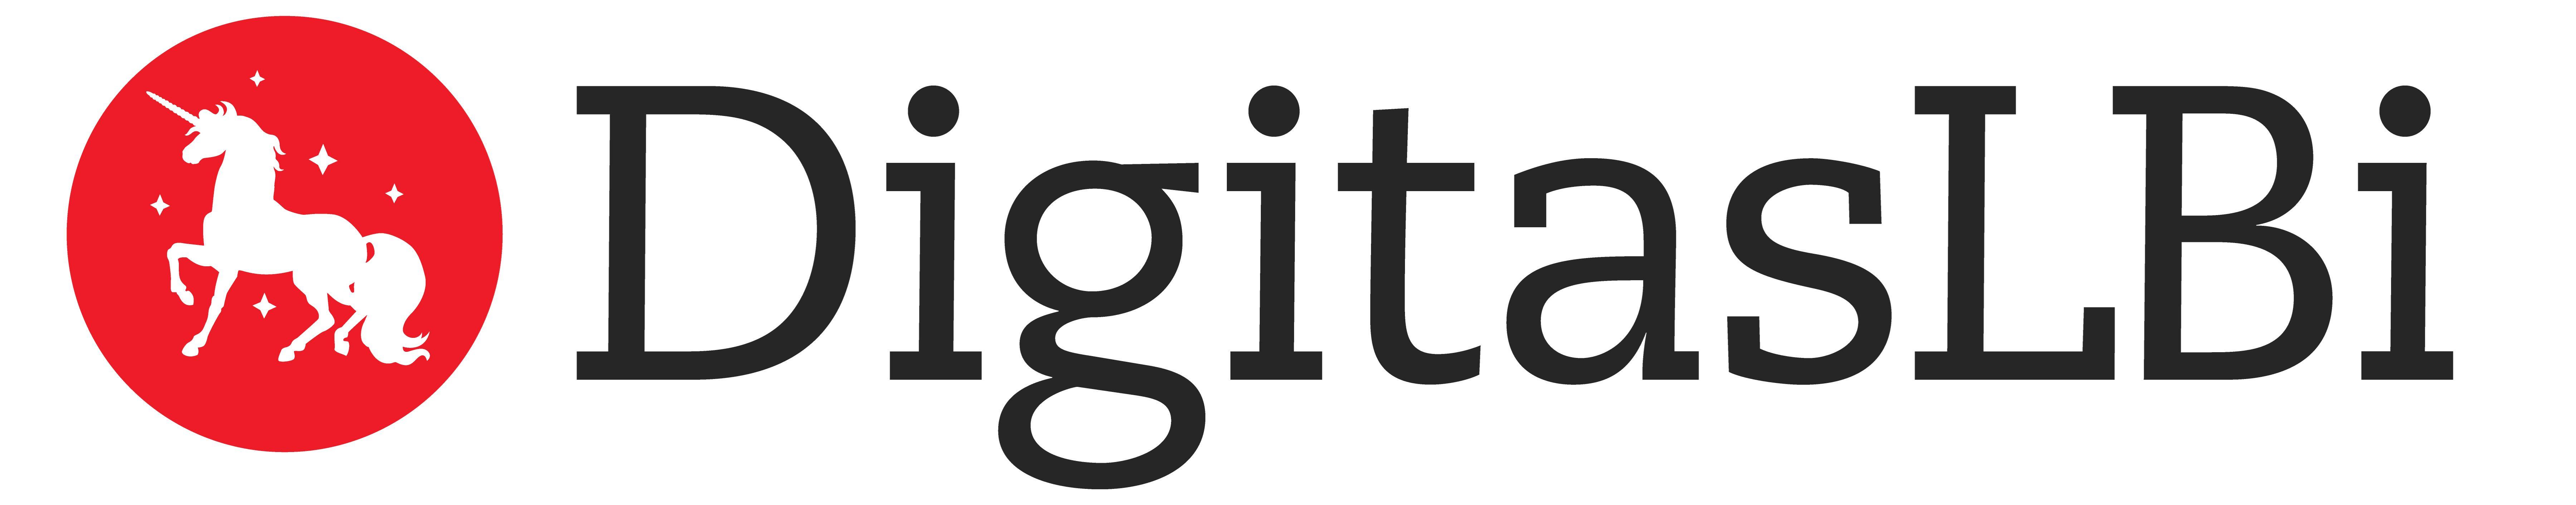 Digitas Logo - DigitasLBi new logo | Brands I like | Pinterest